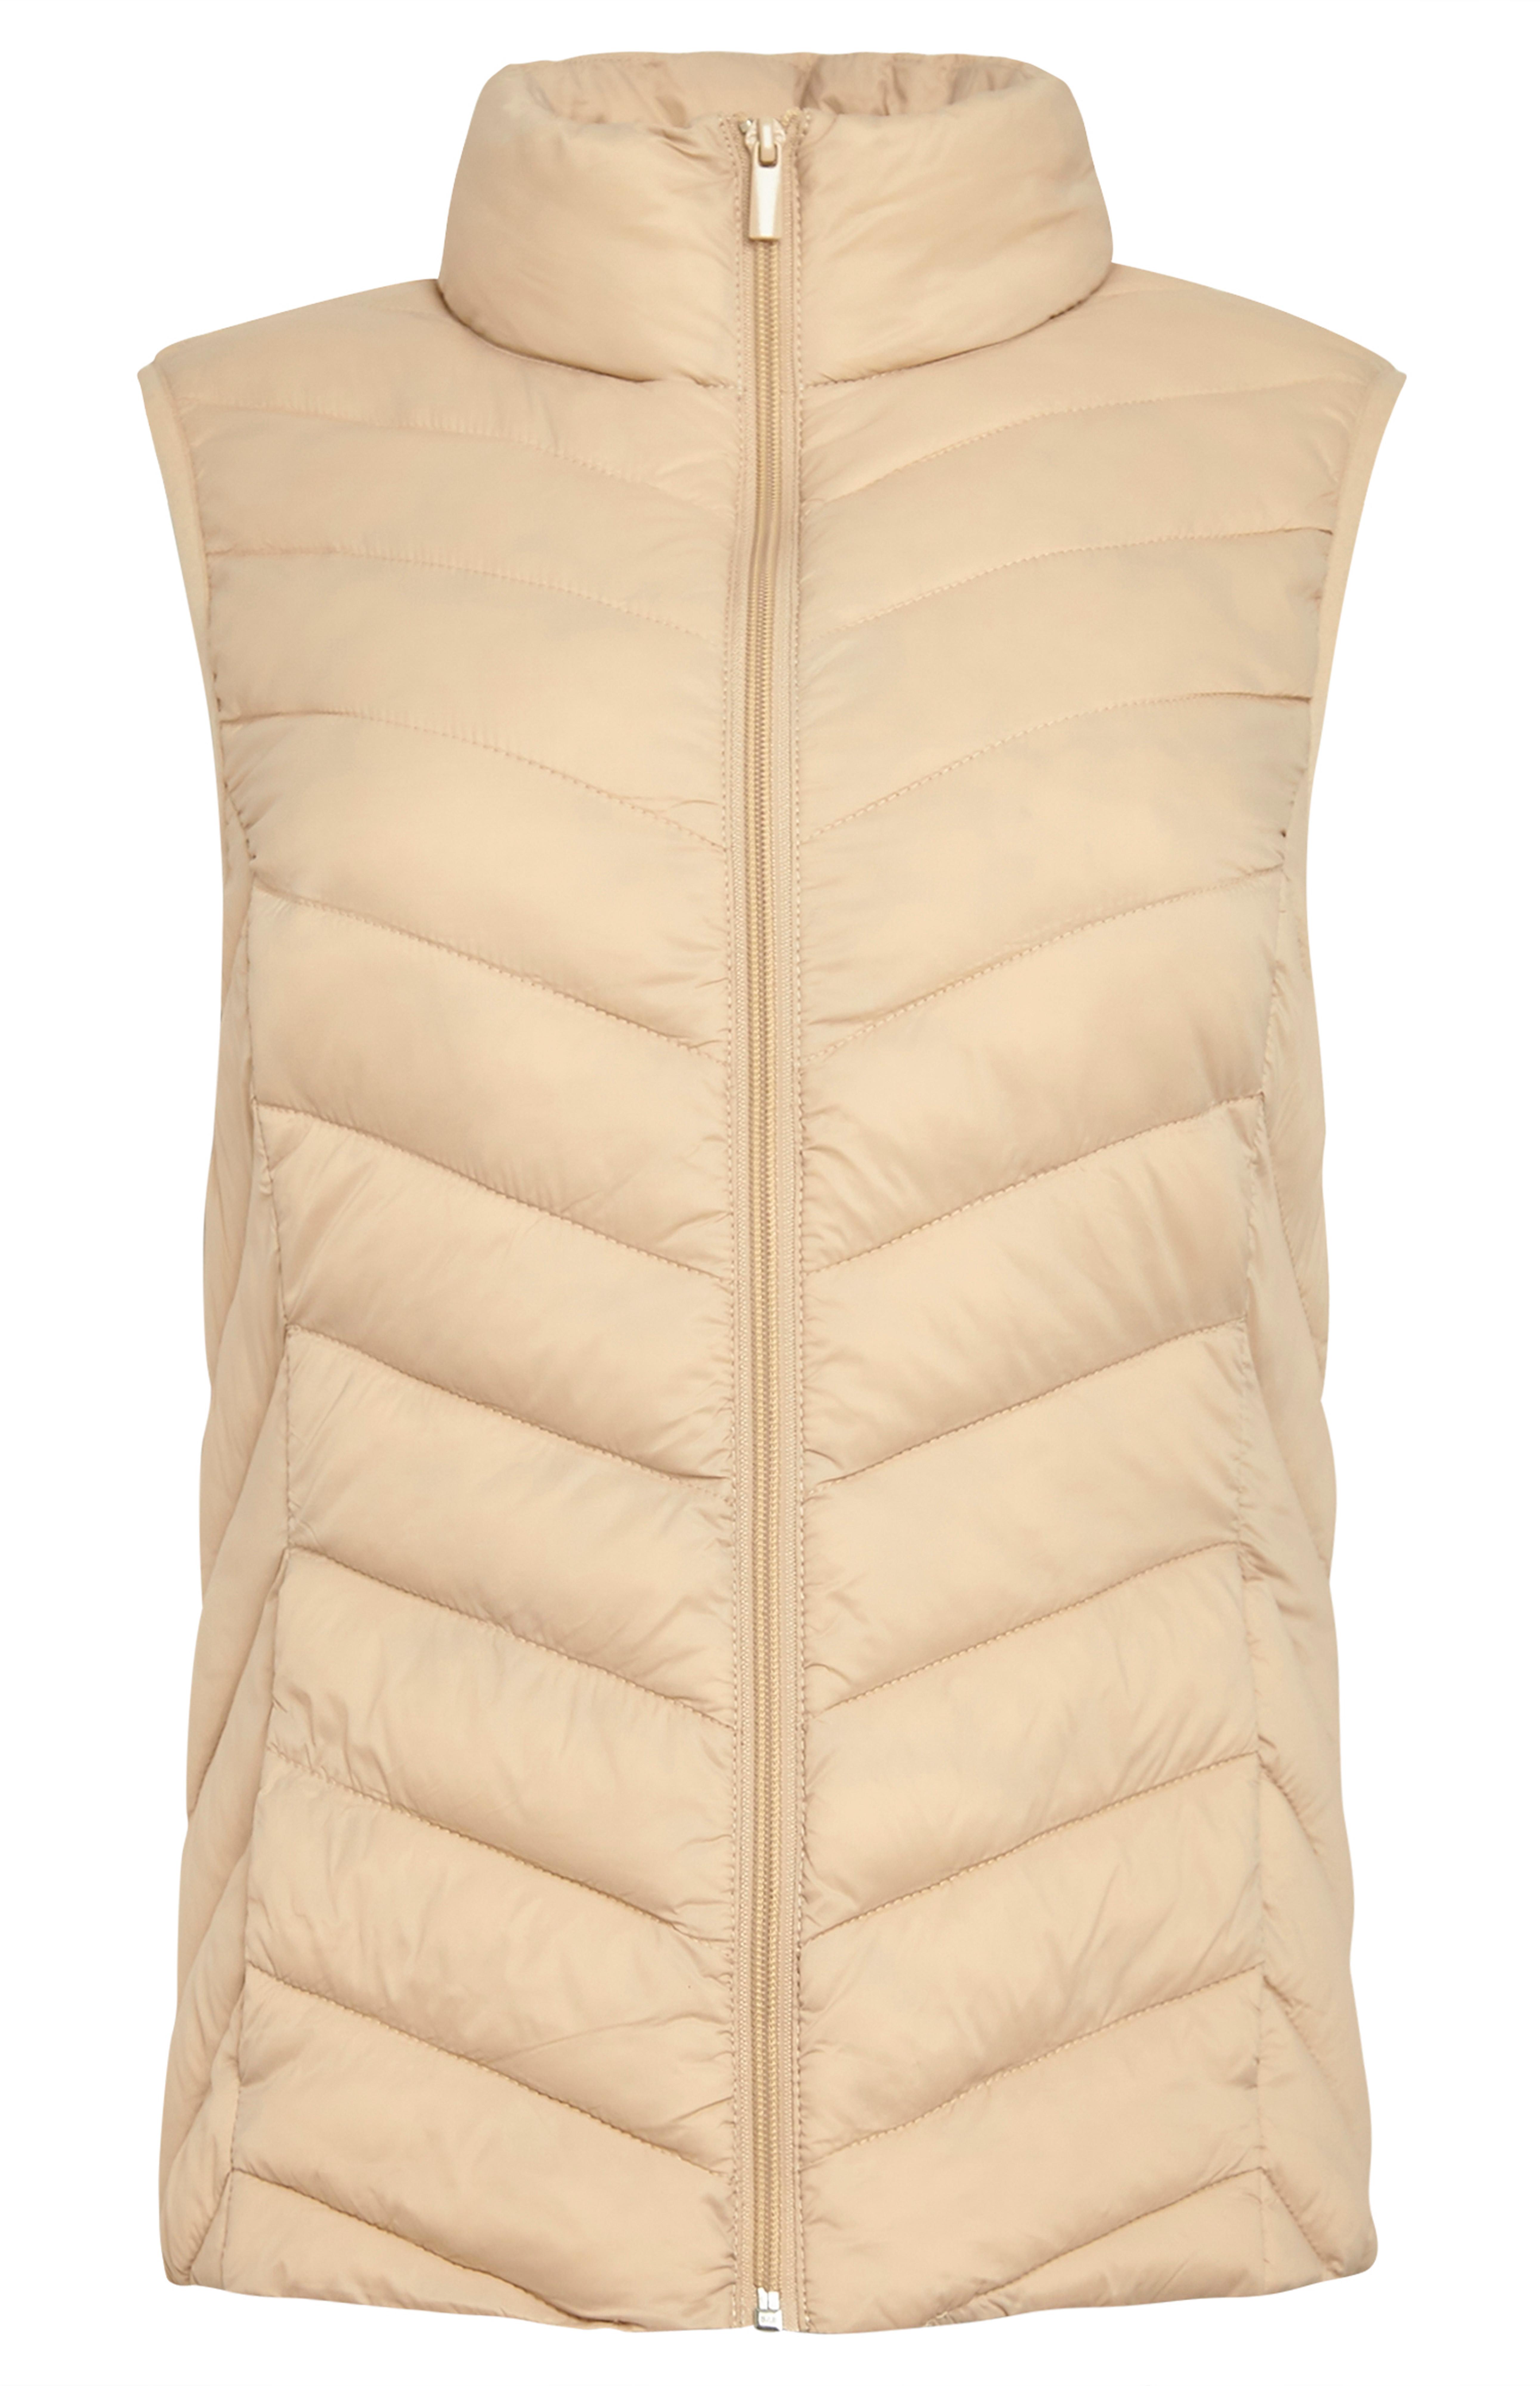 Beige Superlight Vest | Women's Jackets & Coats | Women's Style | Our ...